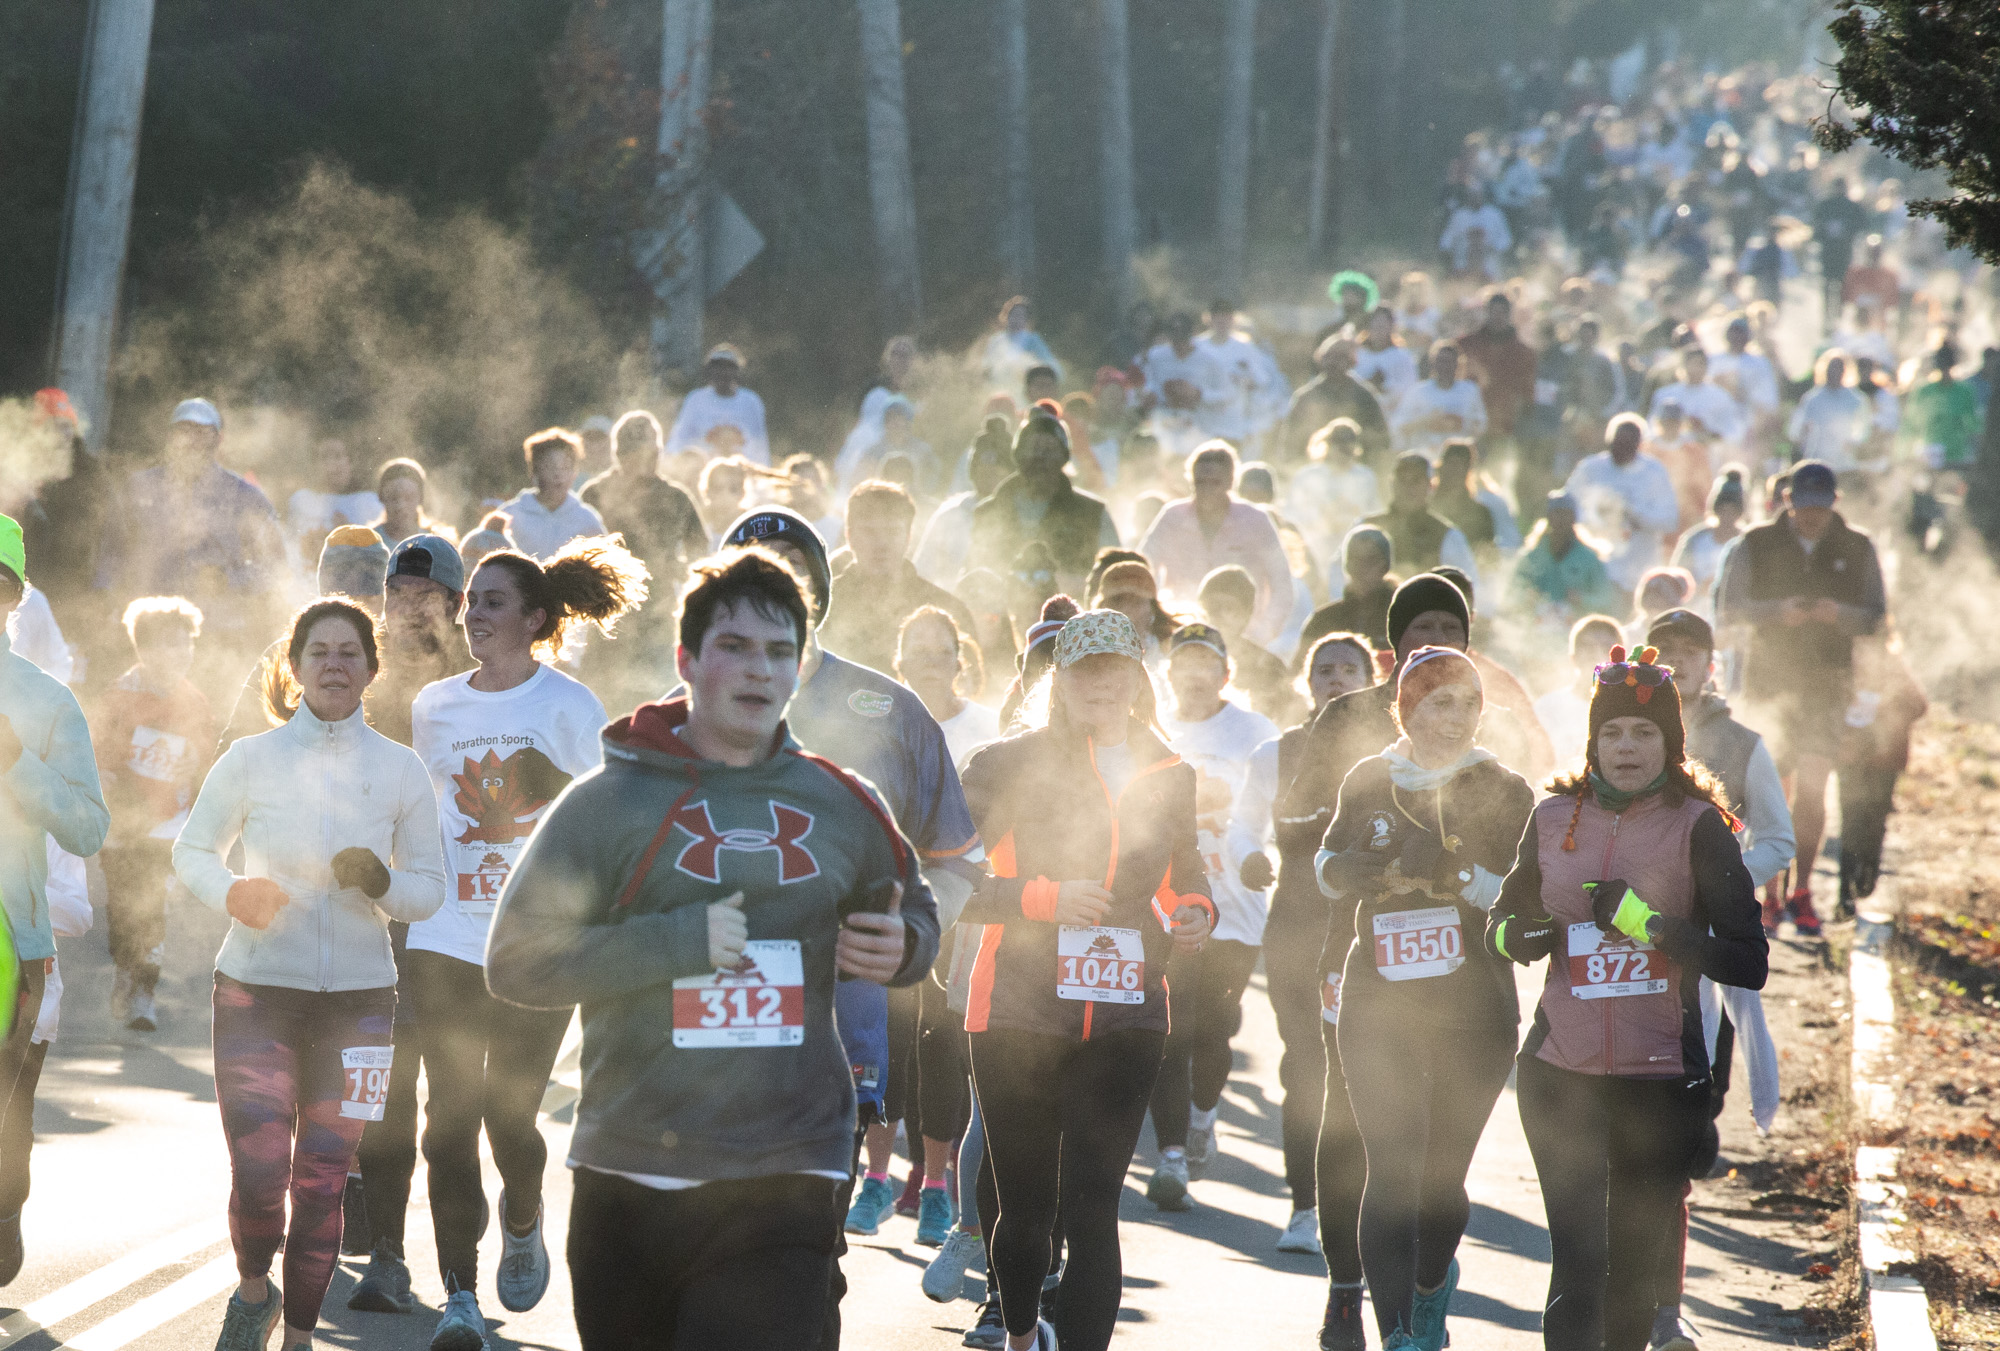 1,500 runners join the race at Hingham’s annual Turkey Trot Bill Brett